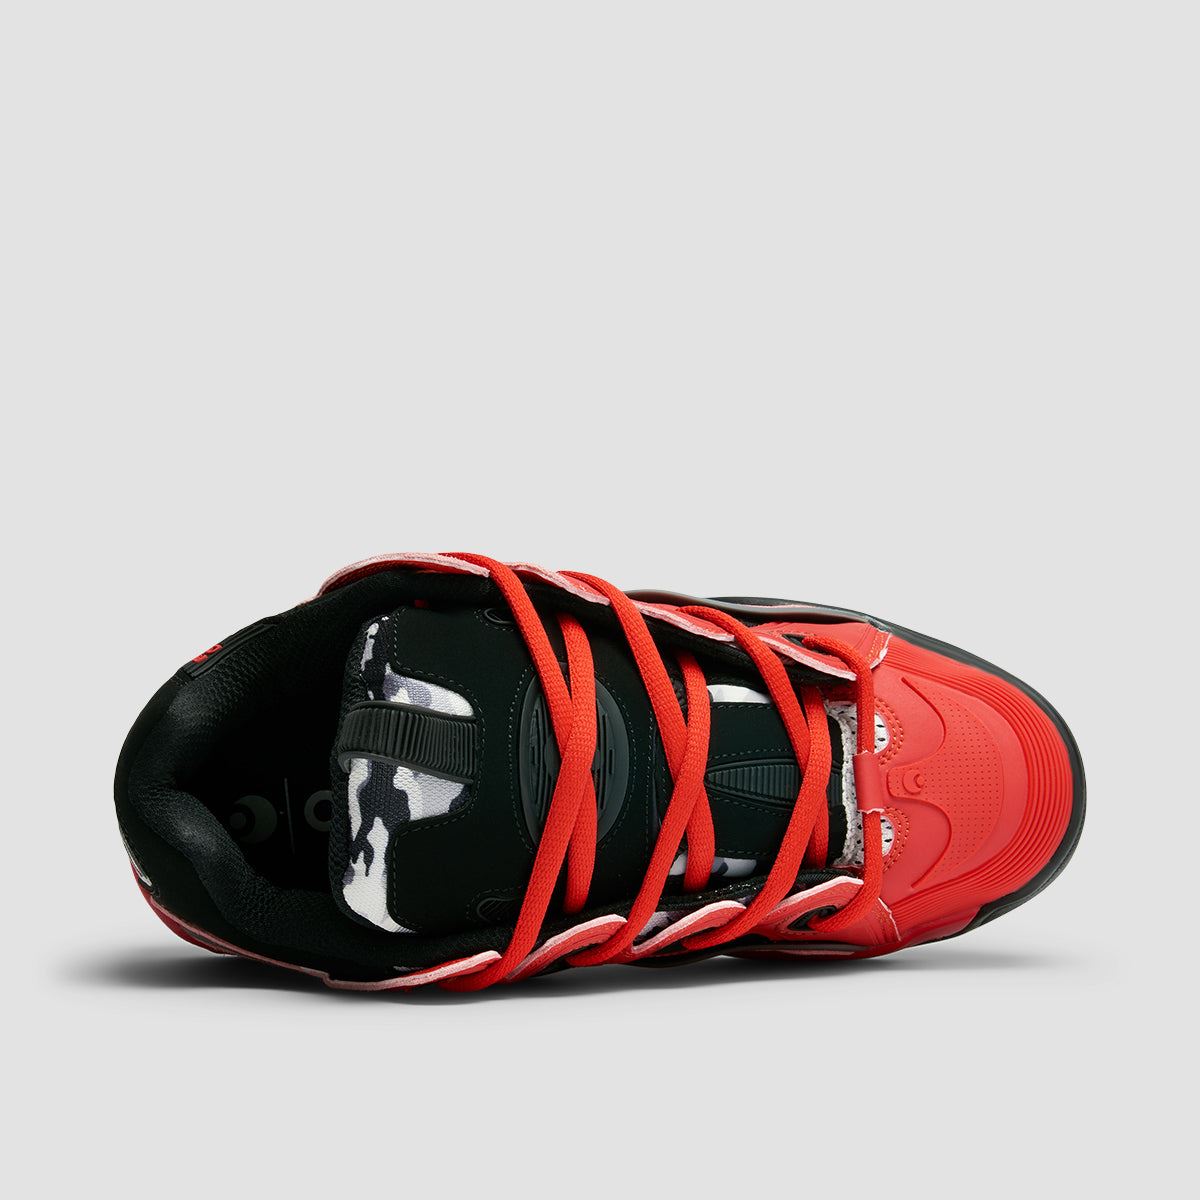 Osiris D3 2001 Shoes - Red/Black/Grey